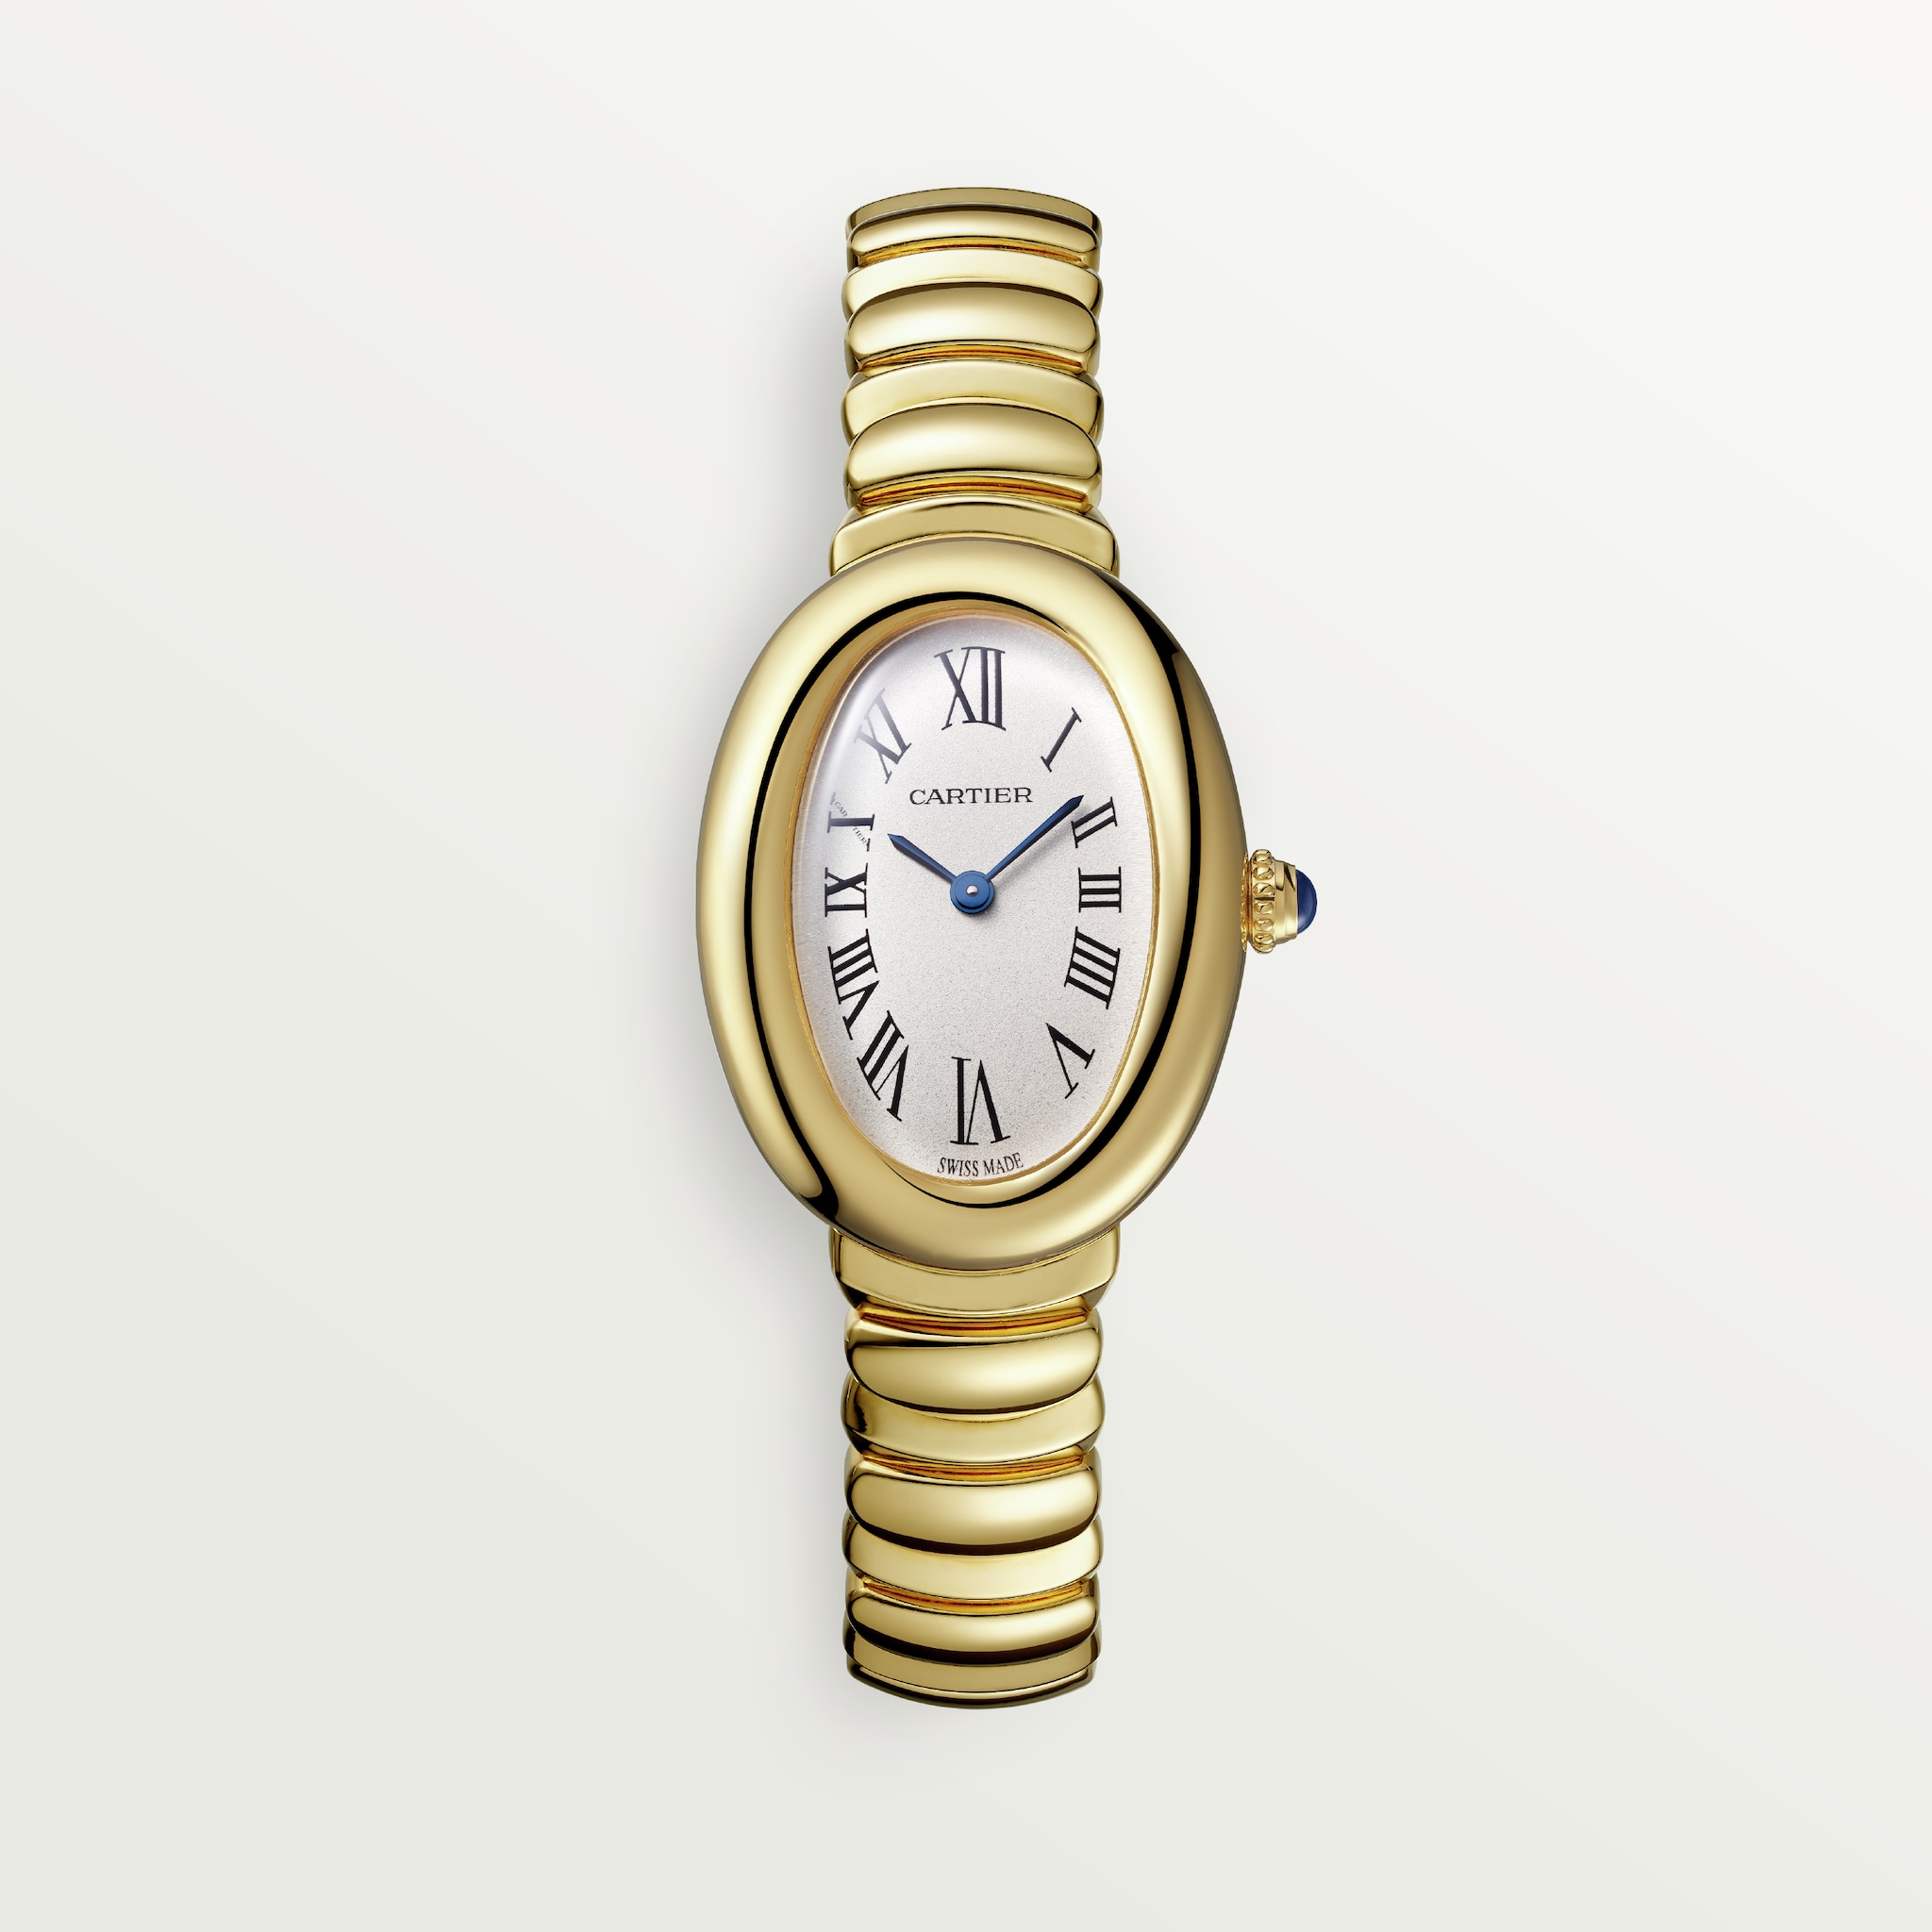 Baignoire watchSmall model, quartz movement, yellow gold